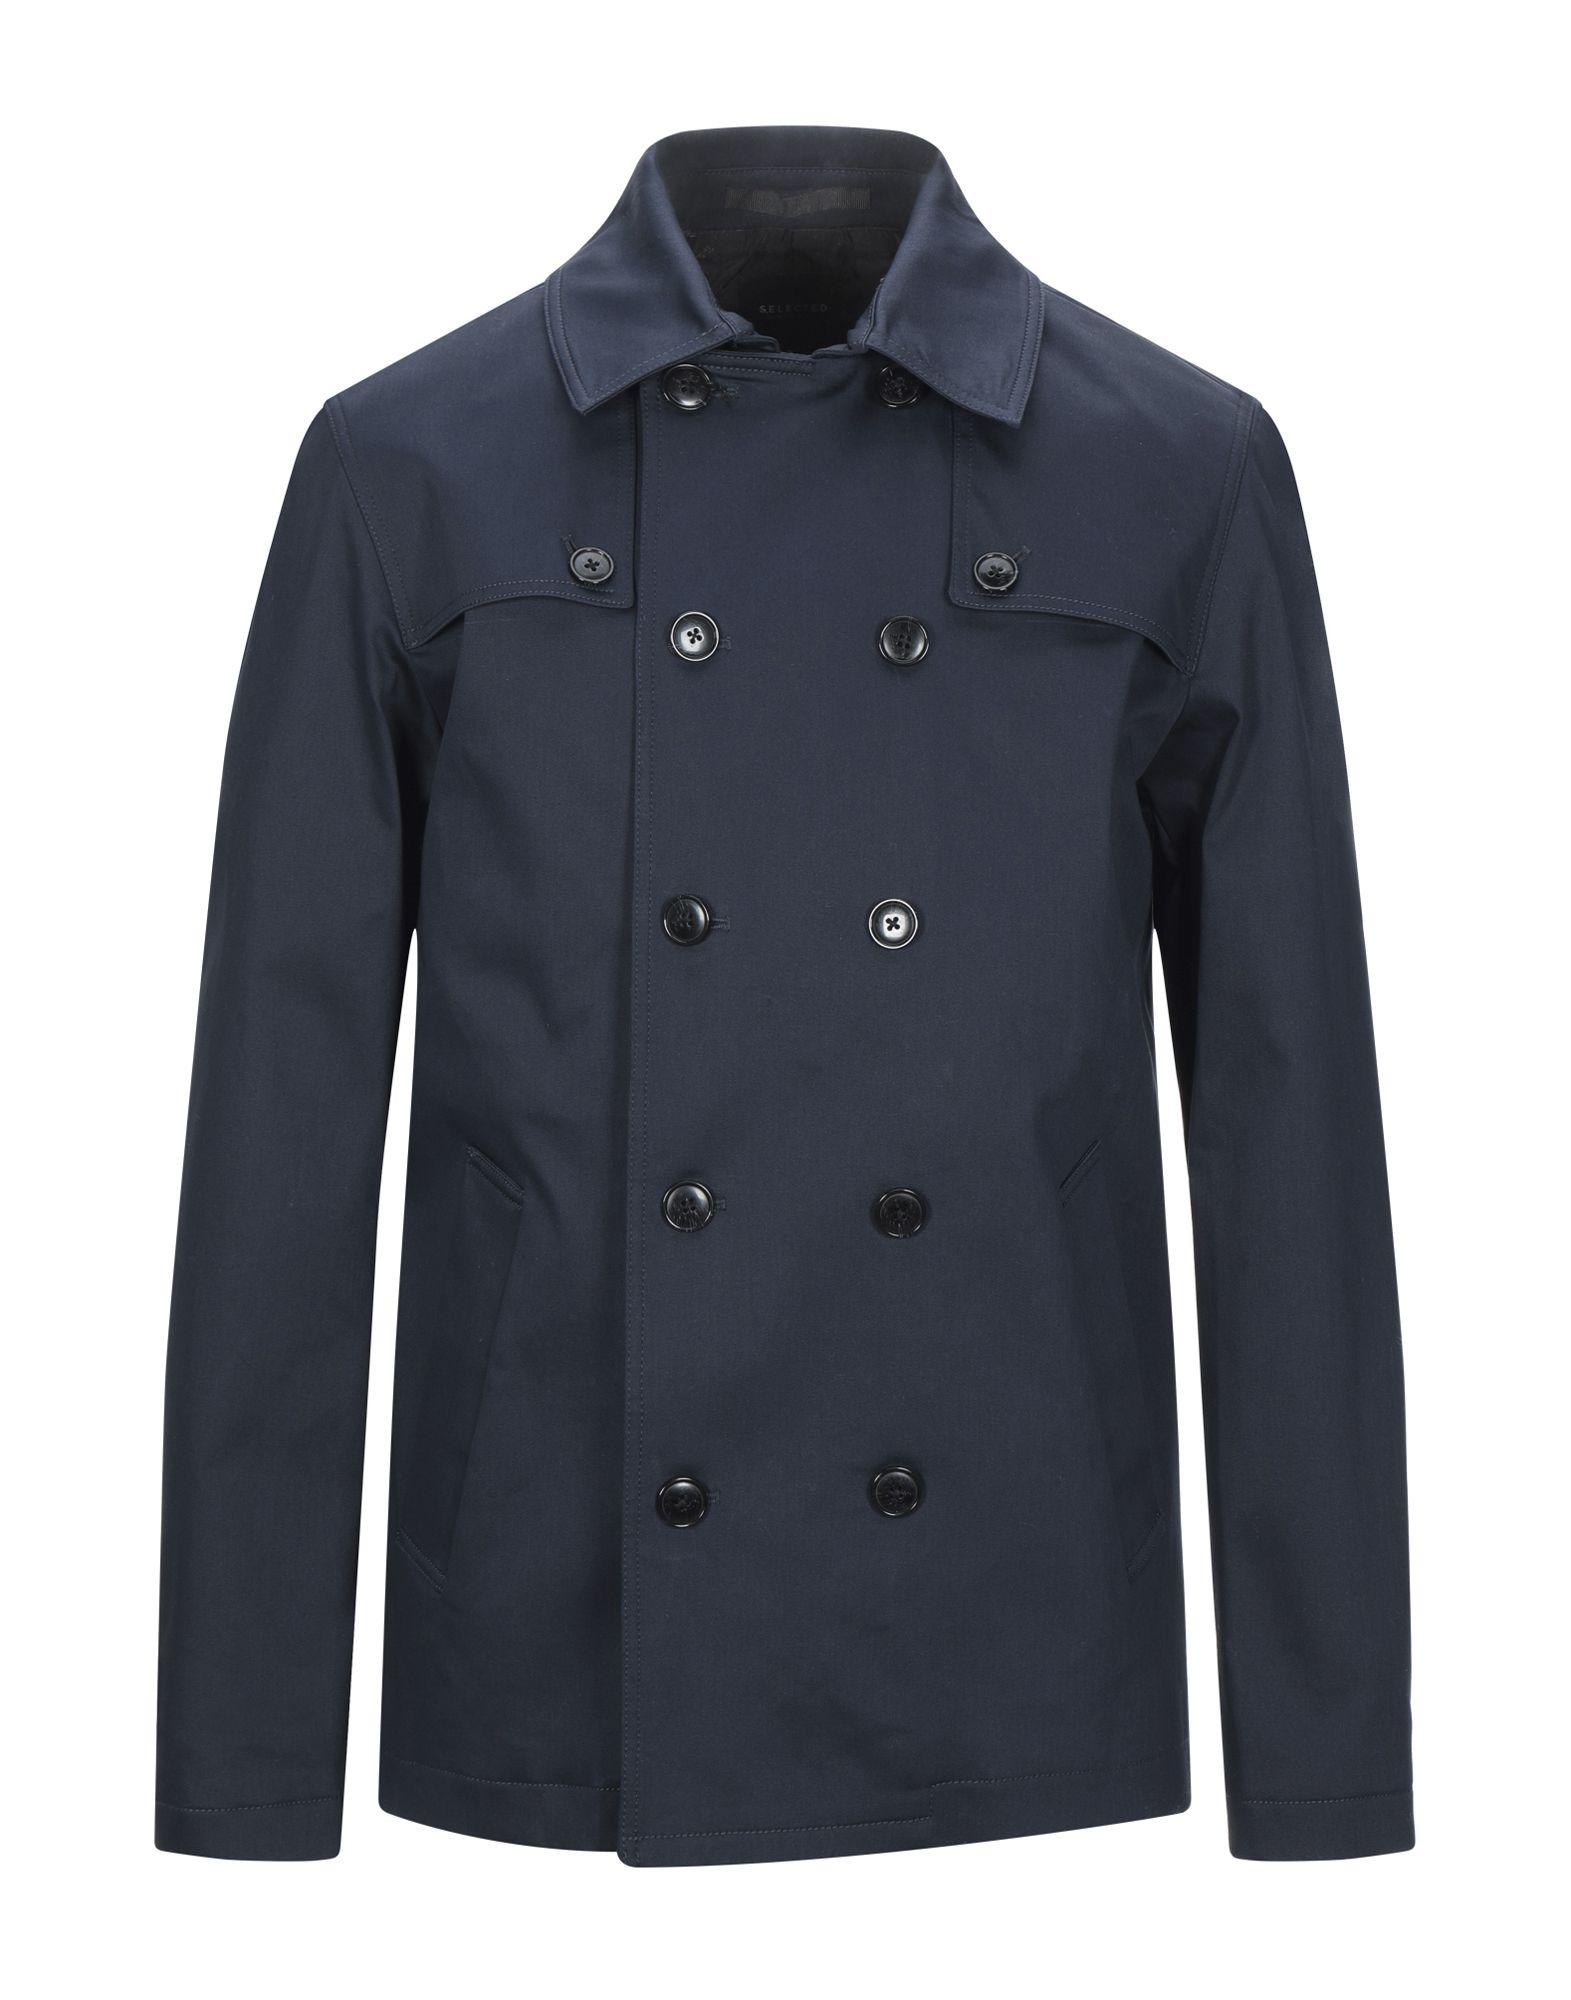 SELECTED Cotton Overcoat in Dark Blue (Blue) for Men - Lyst